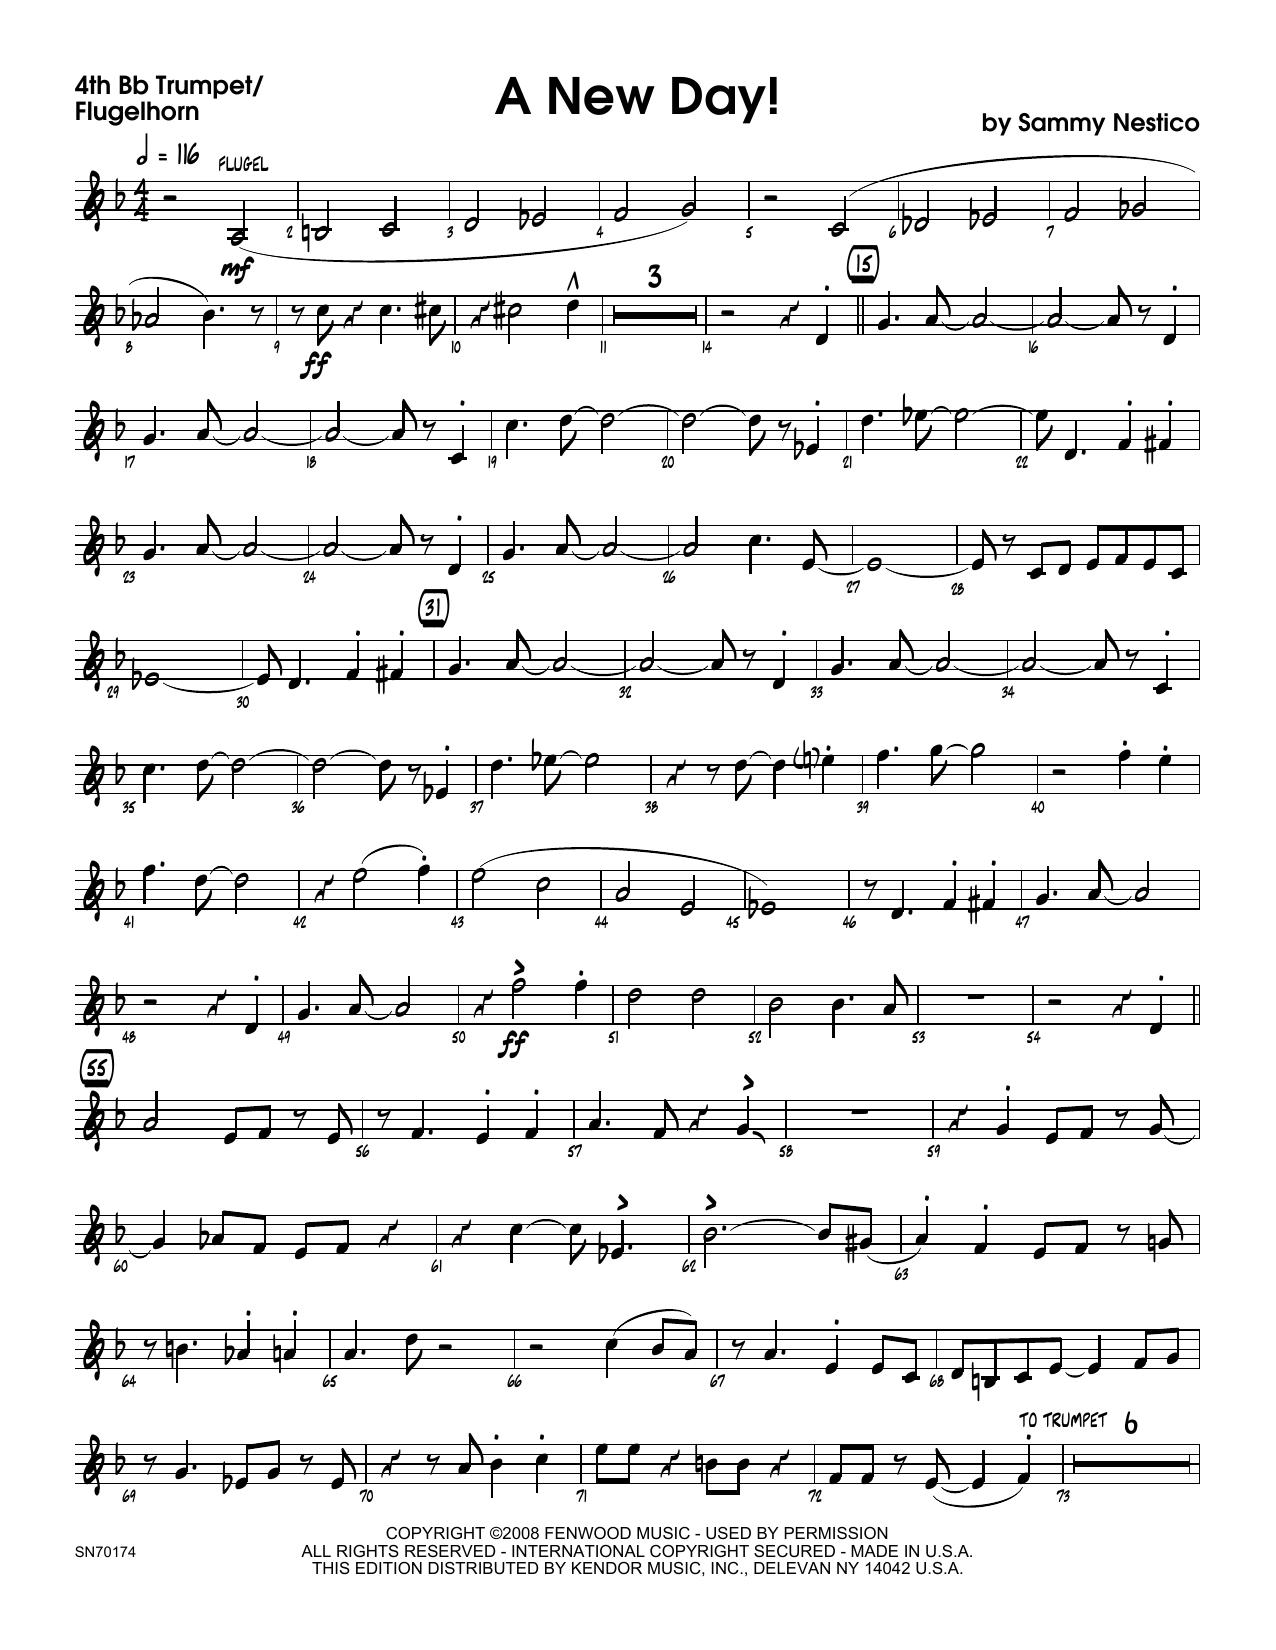 Download Sammy Nestico A New Day! - 4th Bb Trumpet Sheet Music